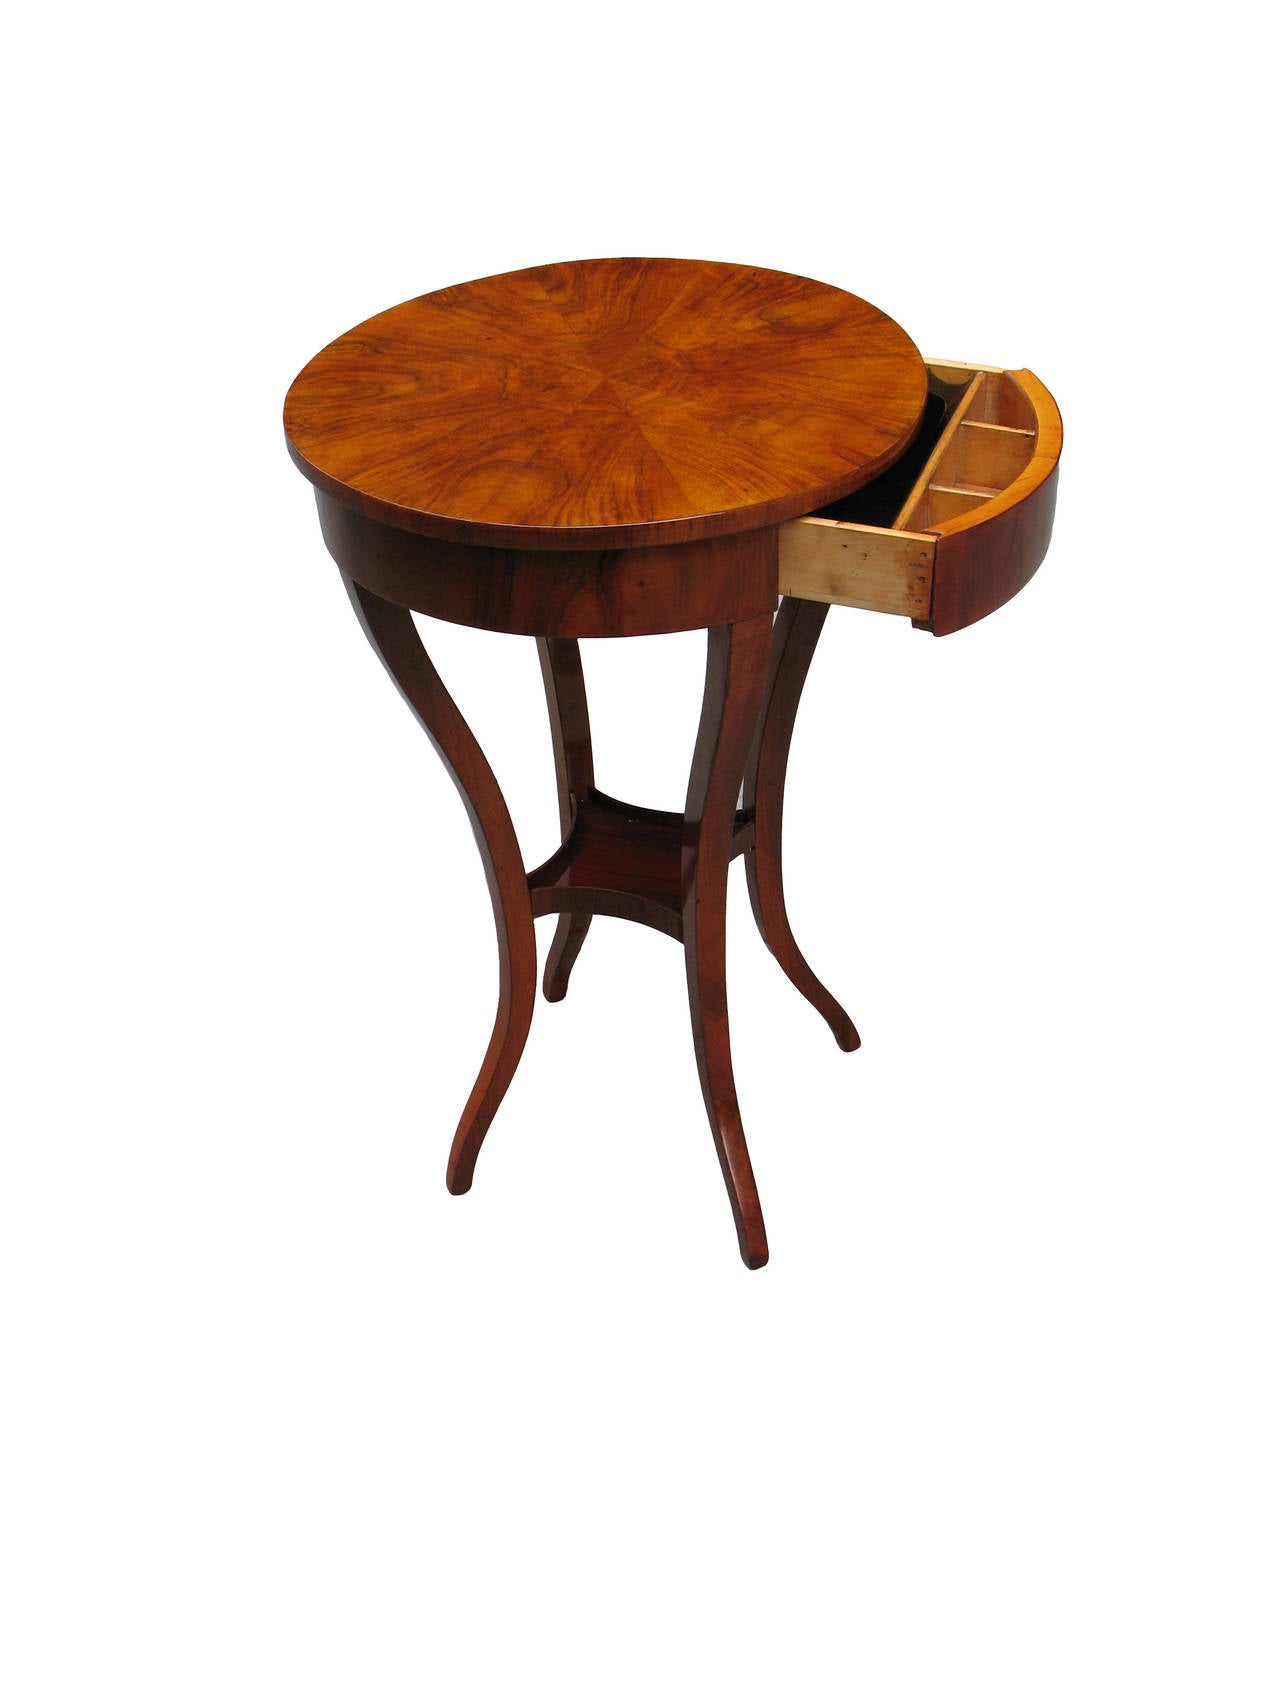 This South German (?) drum-shaped Biedermeier side table, often called 